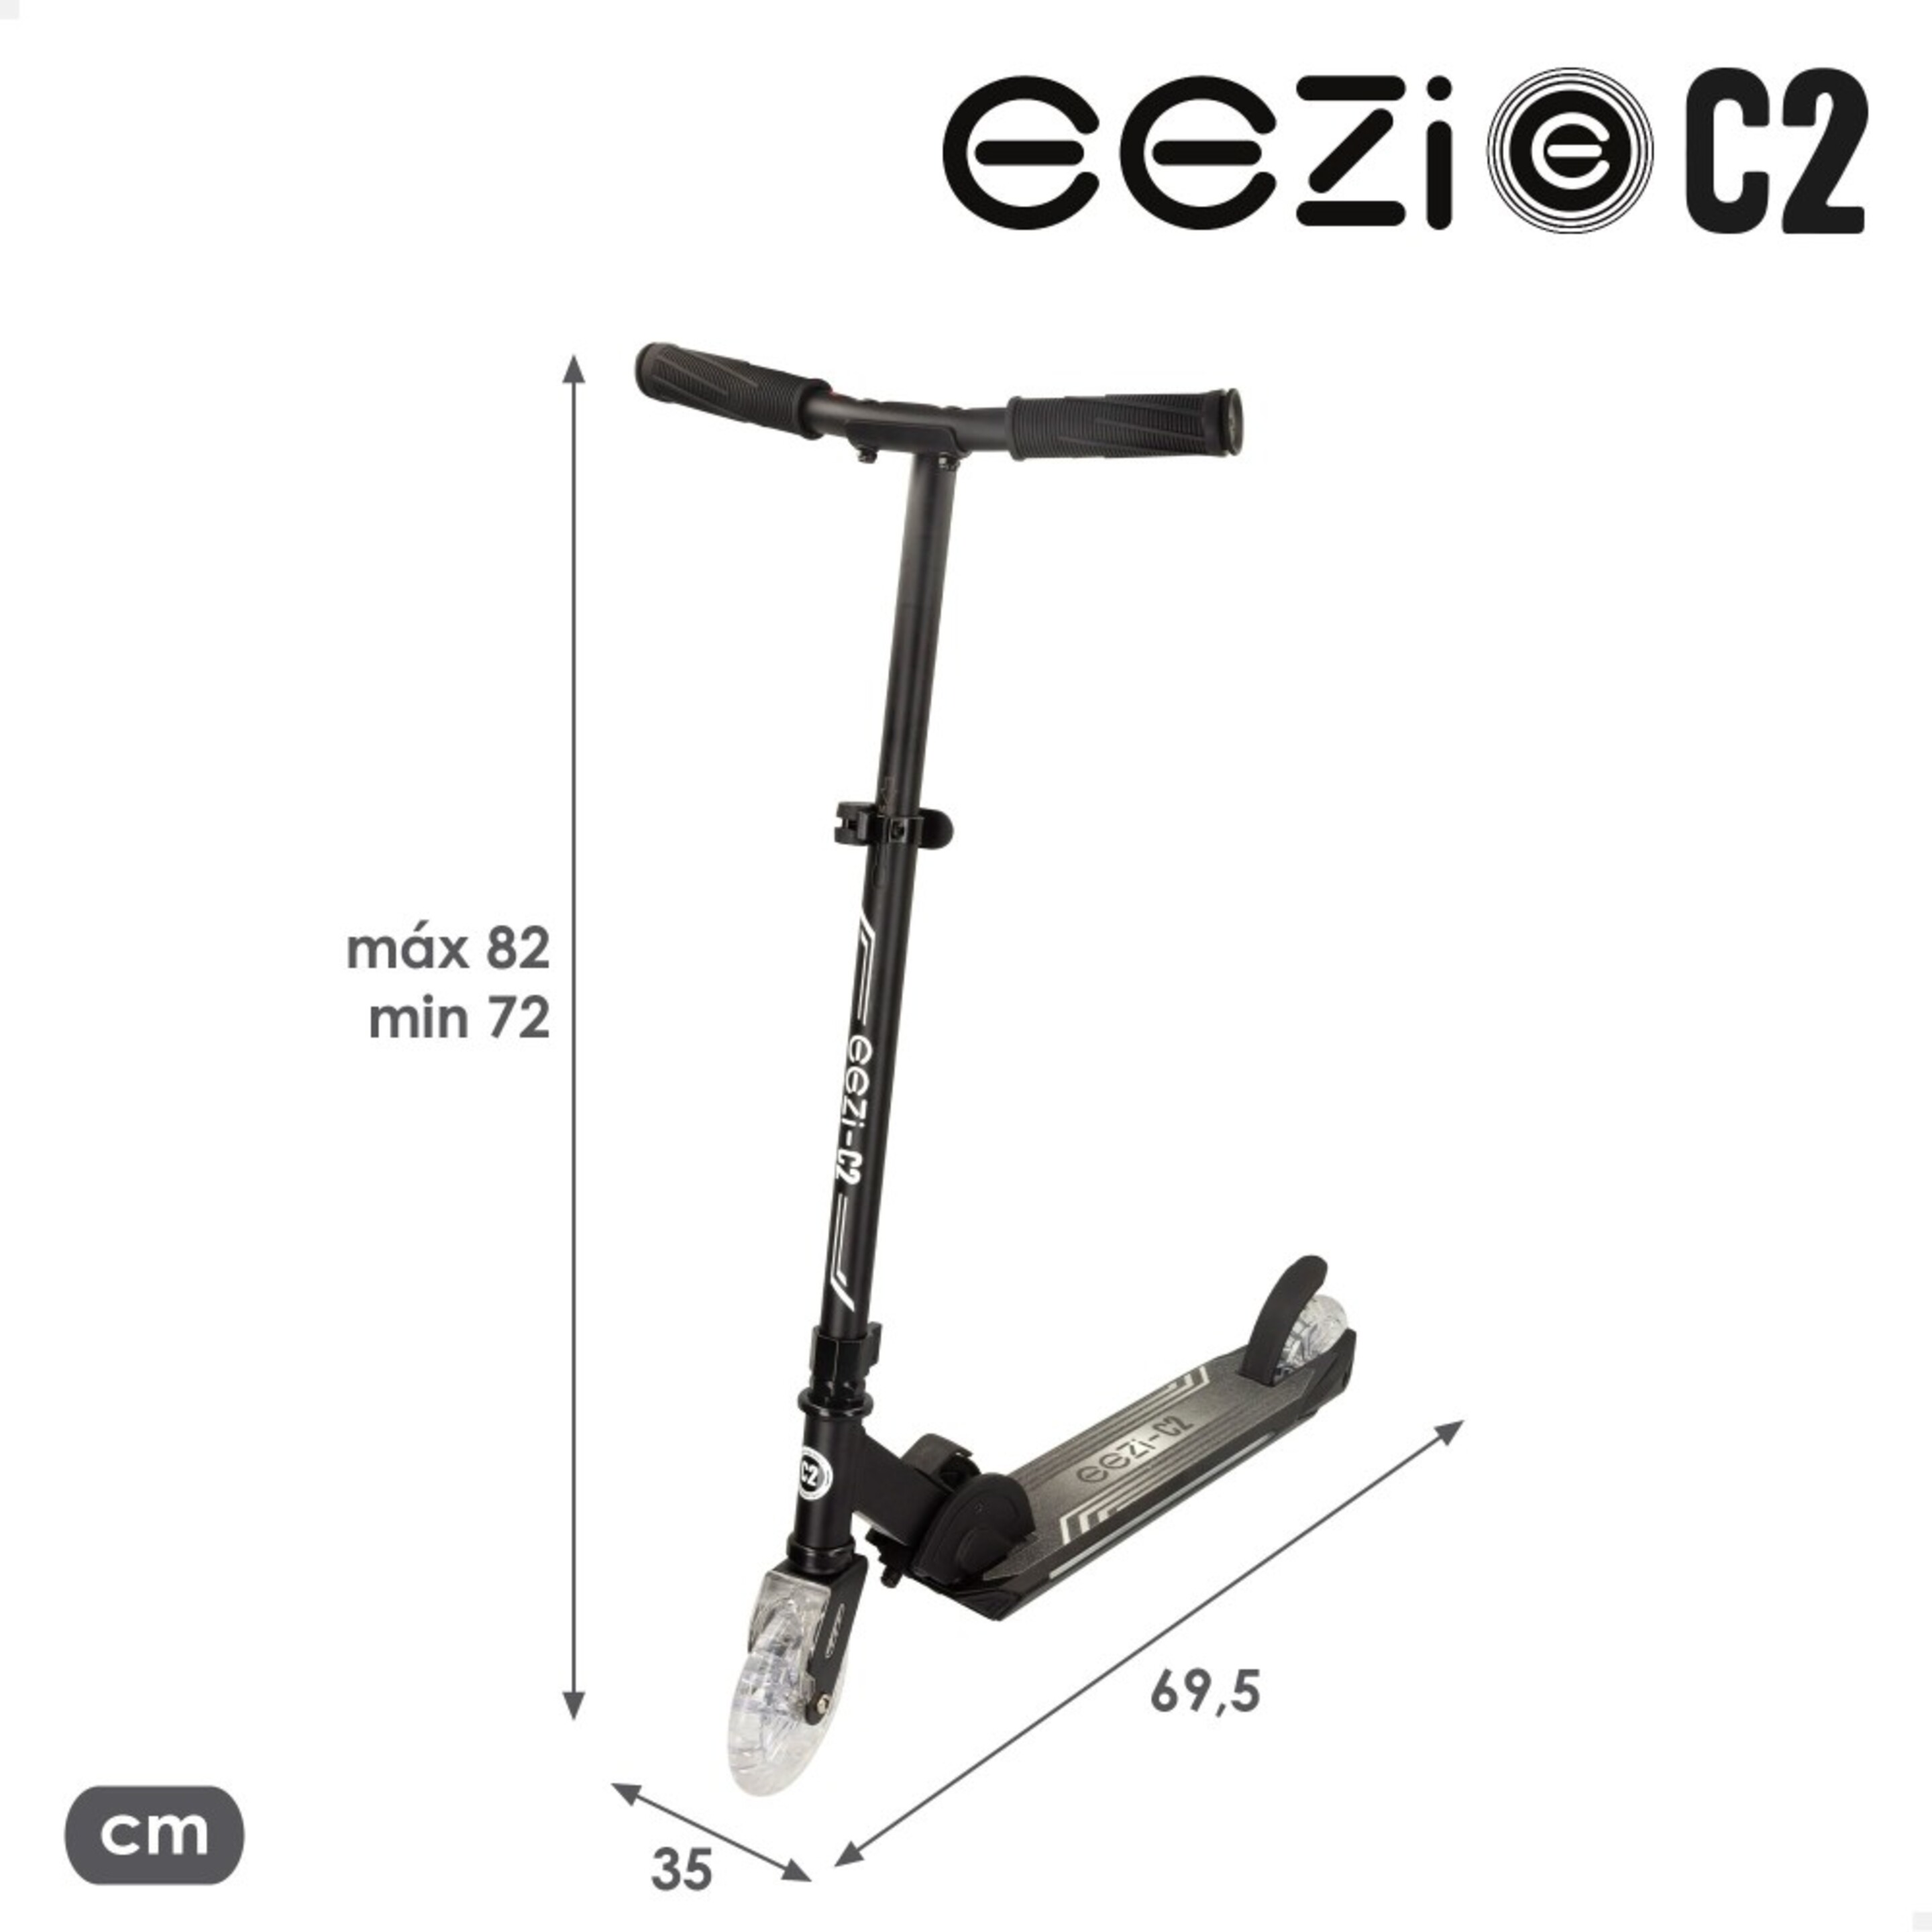 Scooter De 2 Rodas Preto Dobrável C/luzes Personalizáveis Eezi - Preto/Azul | Sport Zone MKP